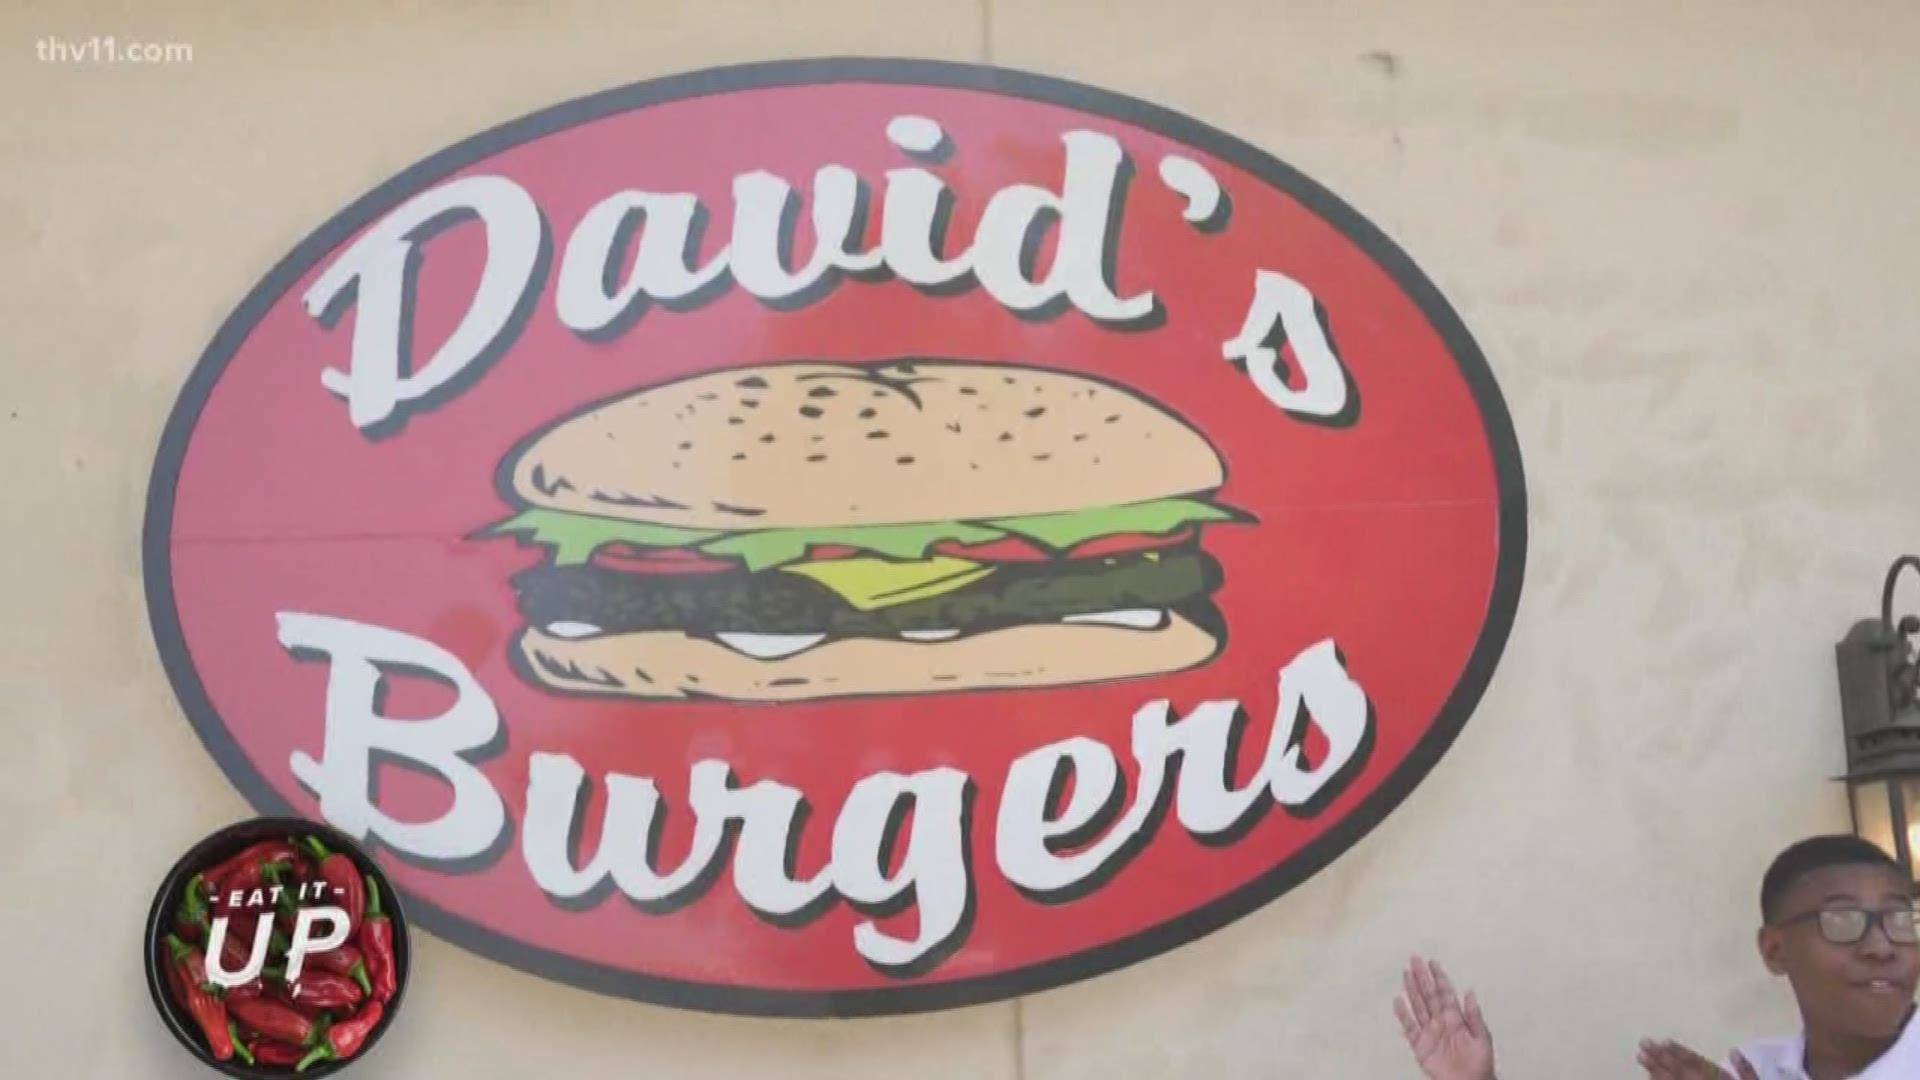 Eat It Up | David's Burgers